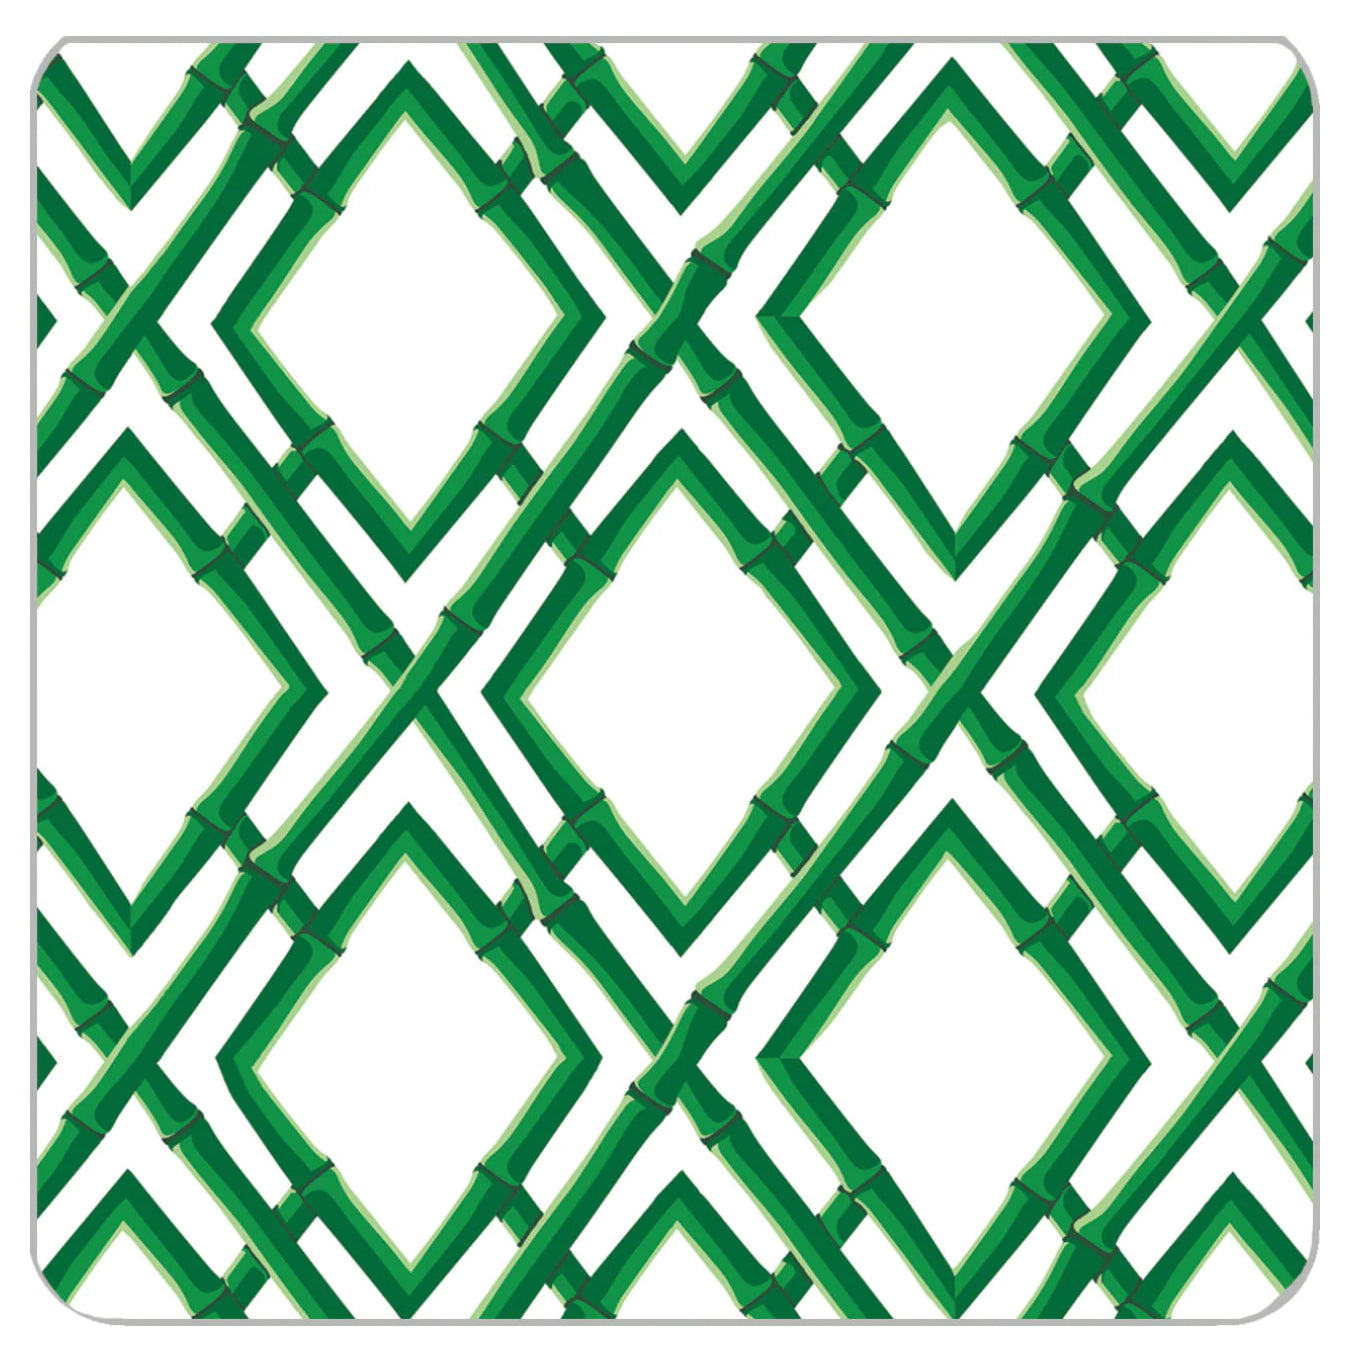 4” Square Bamboo Trellis Green Coasters